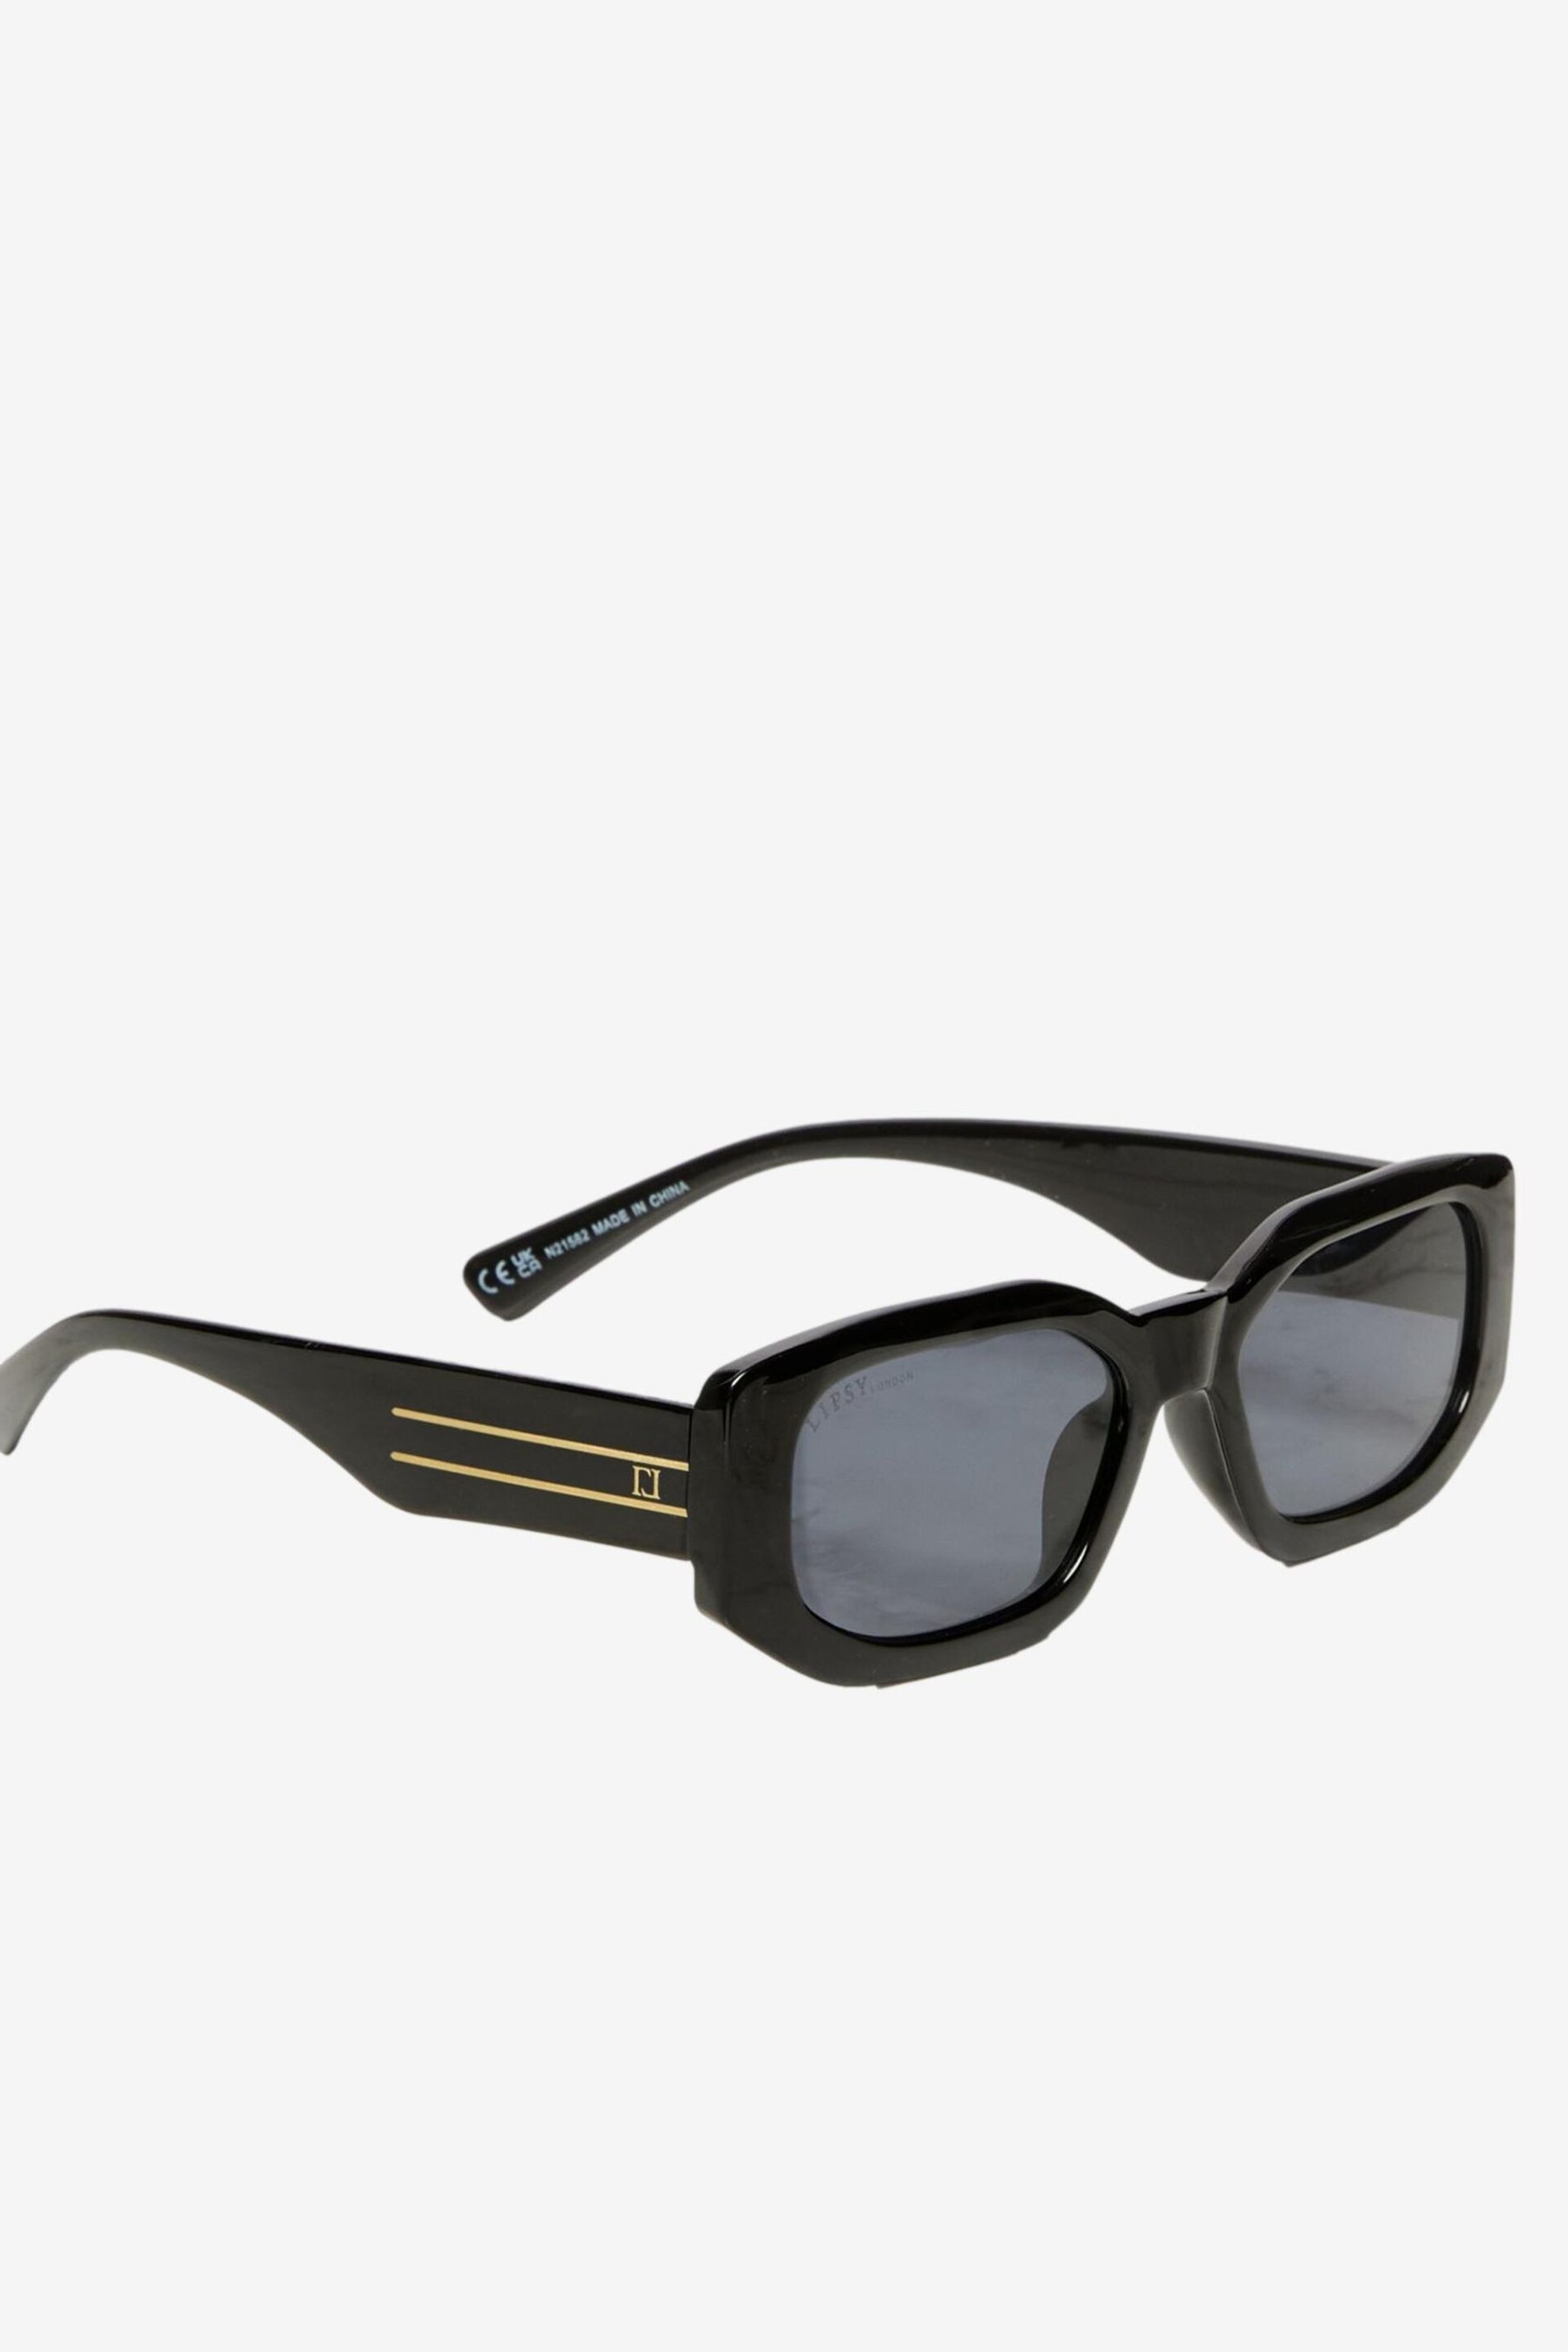 Lipsy Black Narrow Hexagon Frame Sunglasses - Image 5 of 5